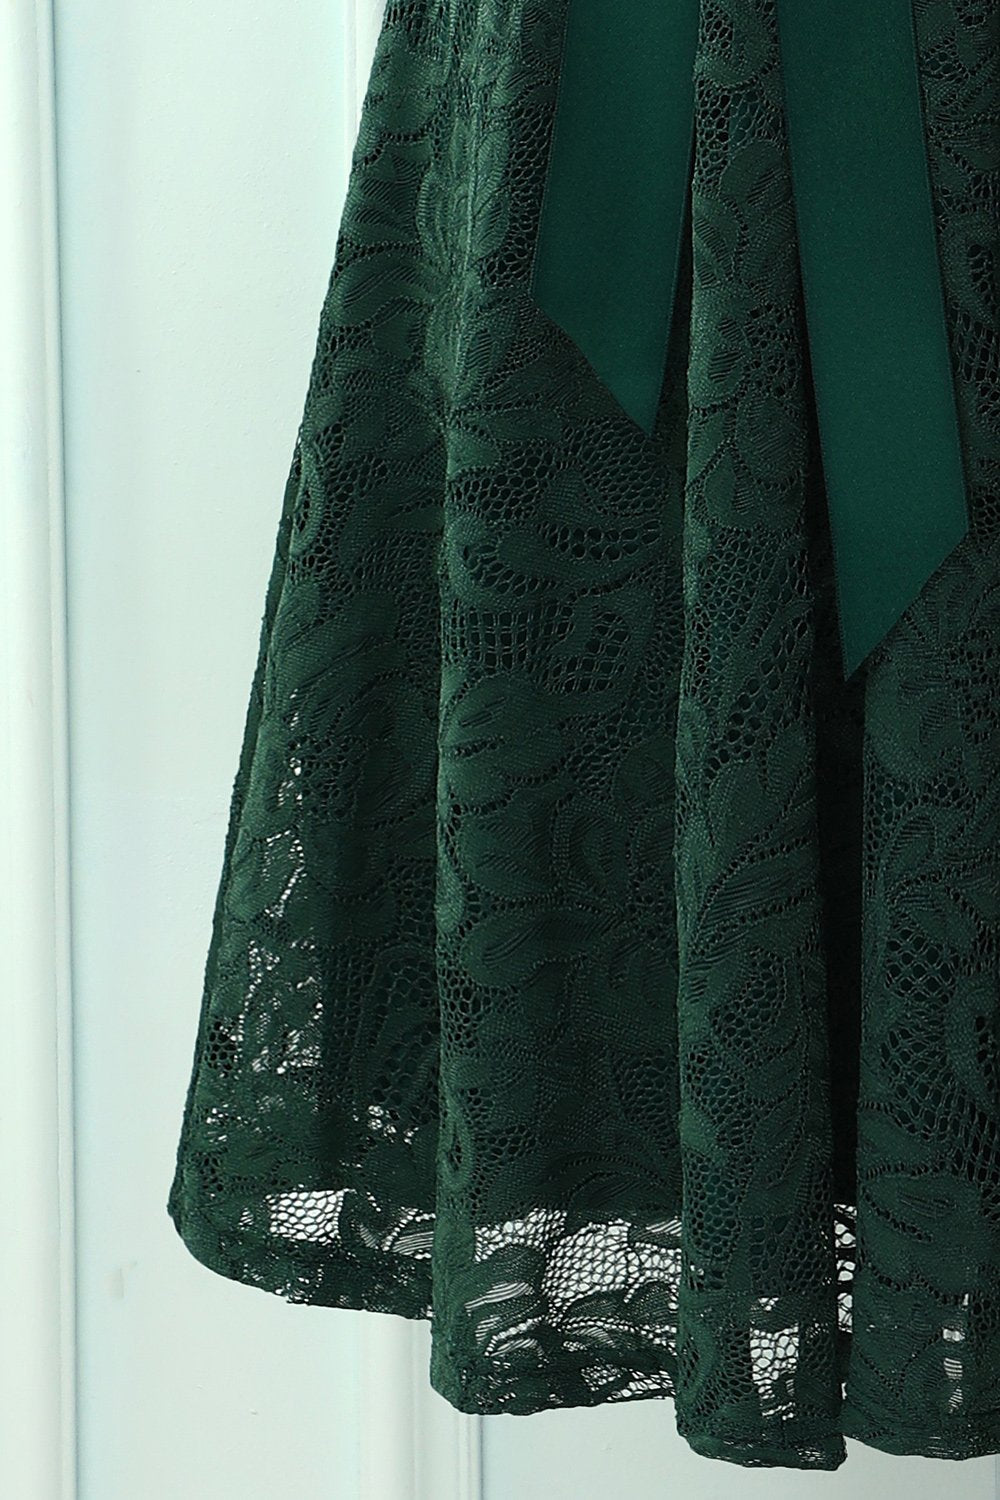 Green V Neck Bridesmaid Lace Dress